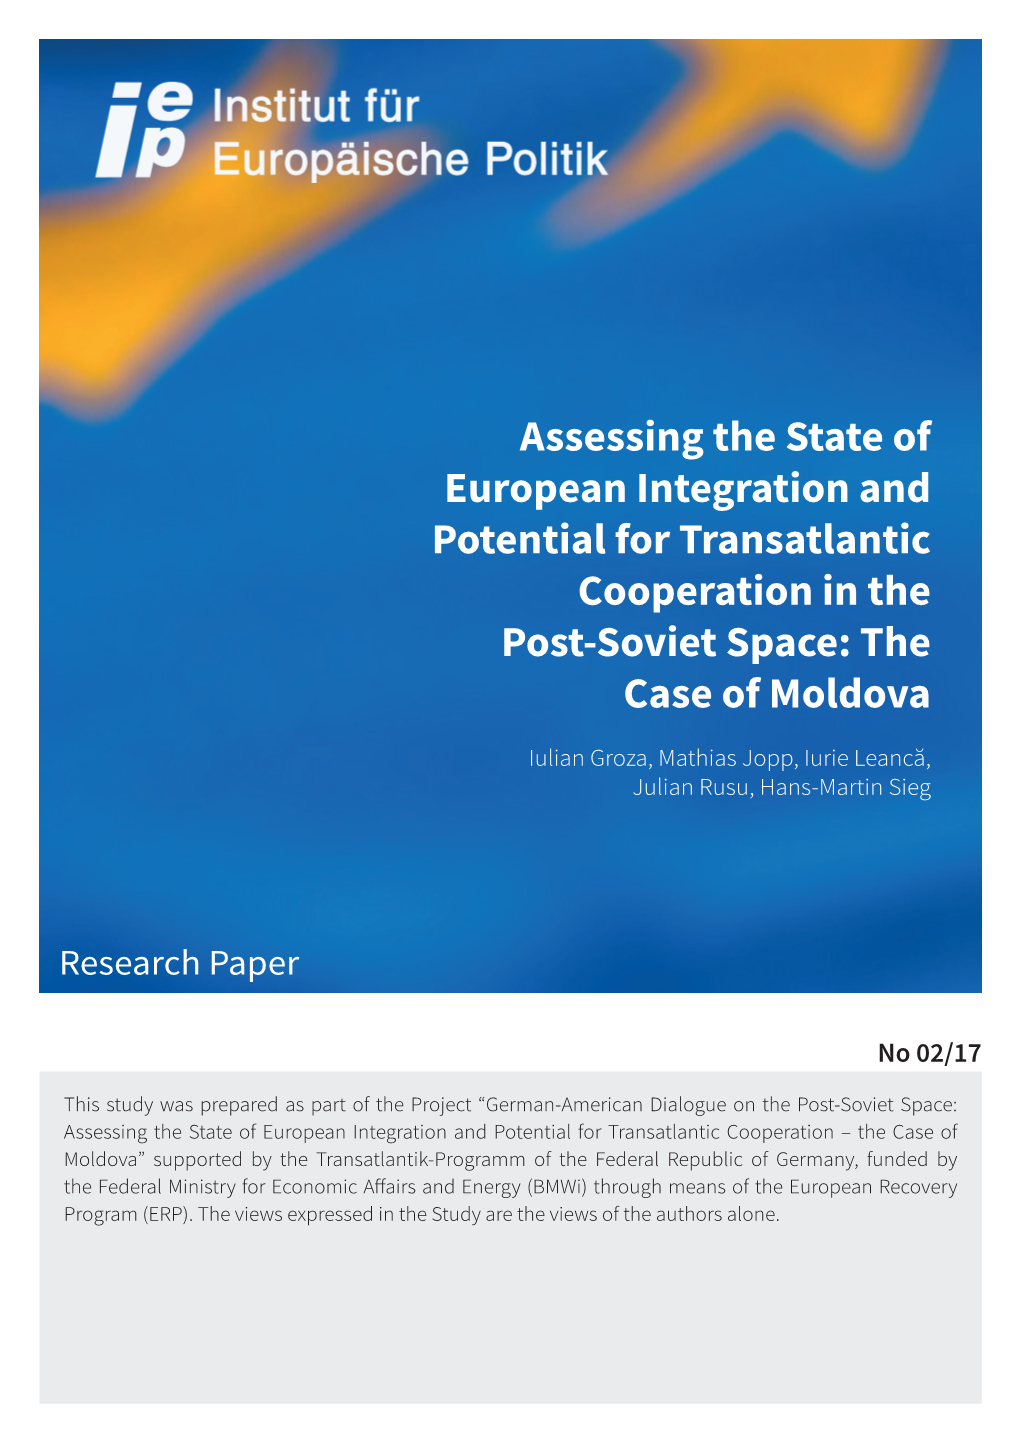 The Case of Moldova